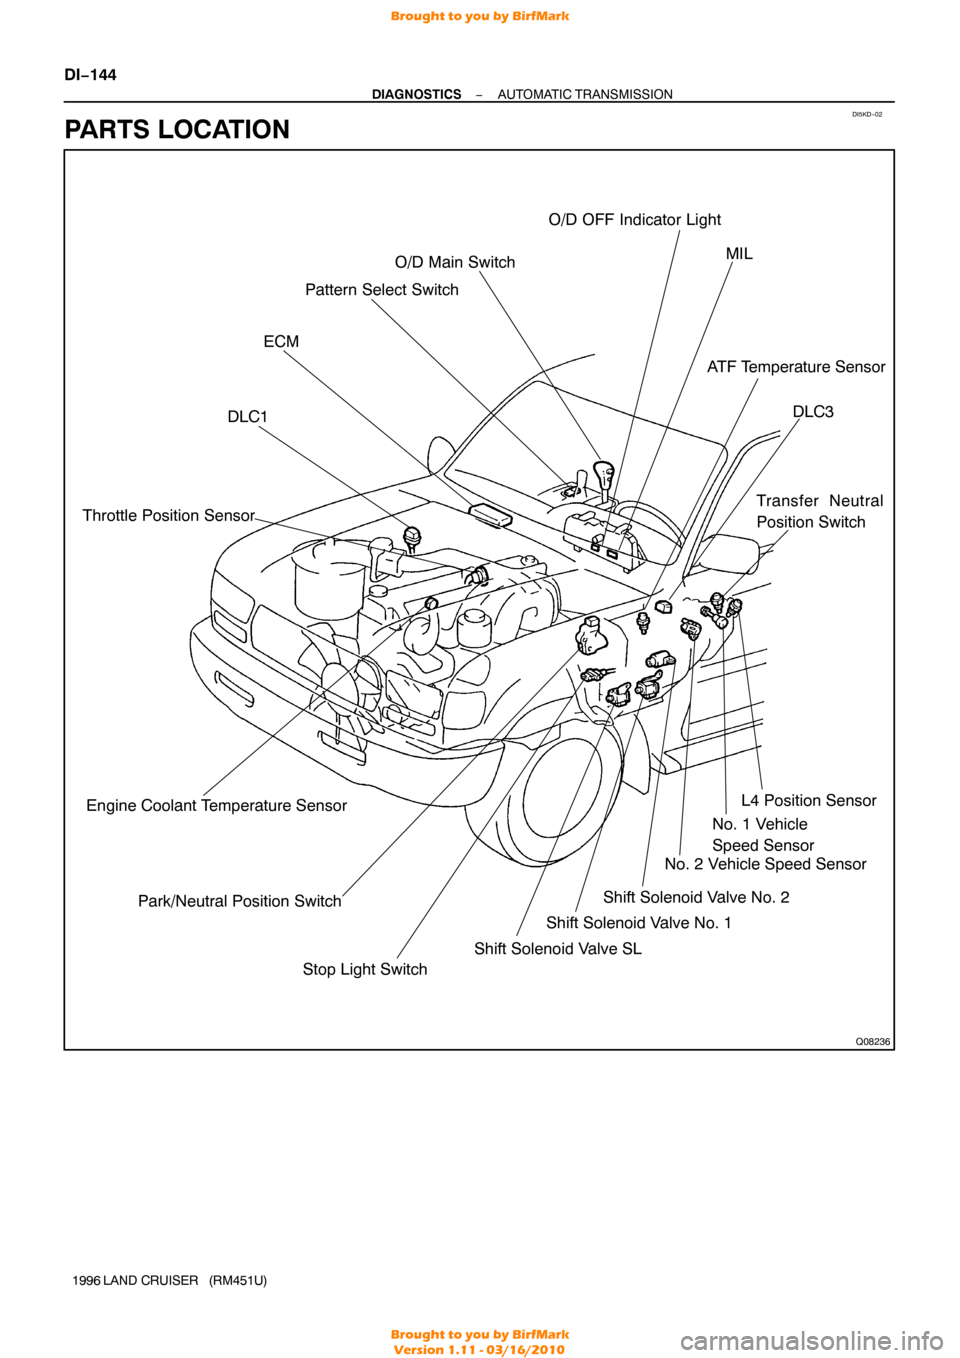 TOYOTA LAND CRUISER 1996 J80 Service Manual DI5KD−02
Q08236
No. 1 Vehicle
Speed Sensor
O/D OFF Indicator Light
MIL
Pattern Select Switch O/D Main Switch
DLC1
Shift Solenoid Valve SL
ECM
Stop Light Switch L4 Position Sensor
Park/Neutral Positi